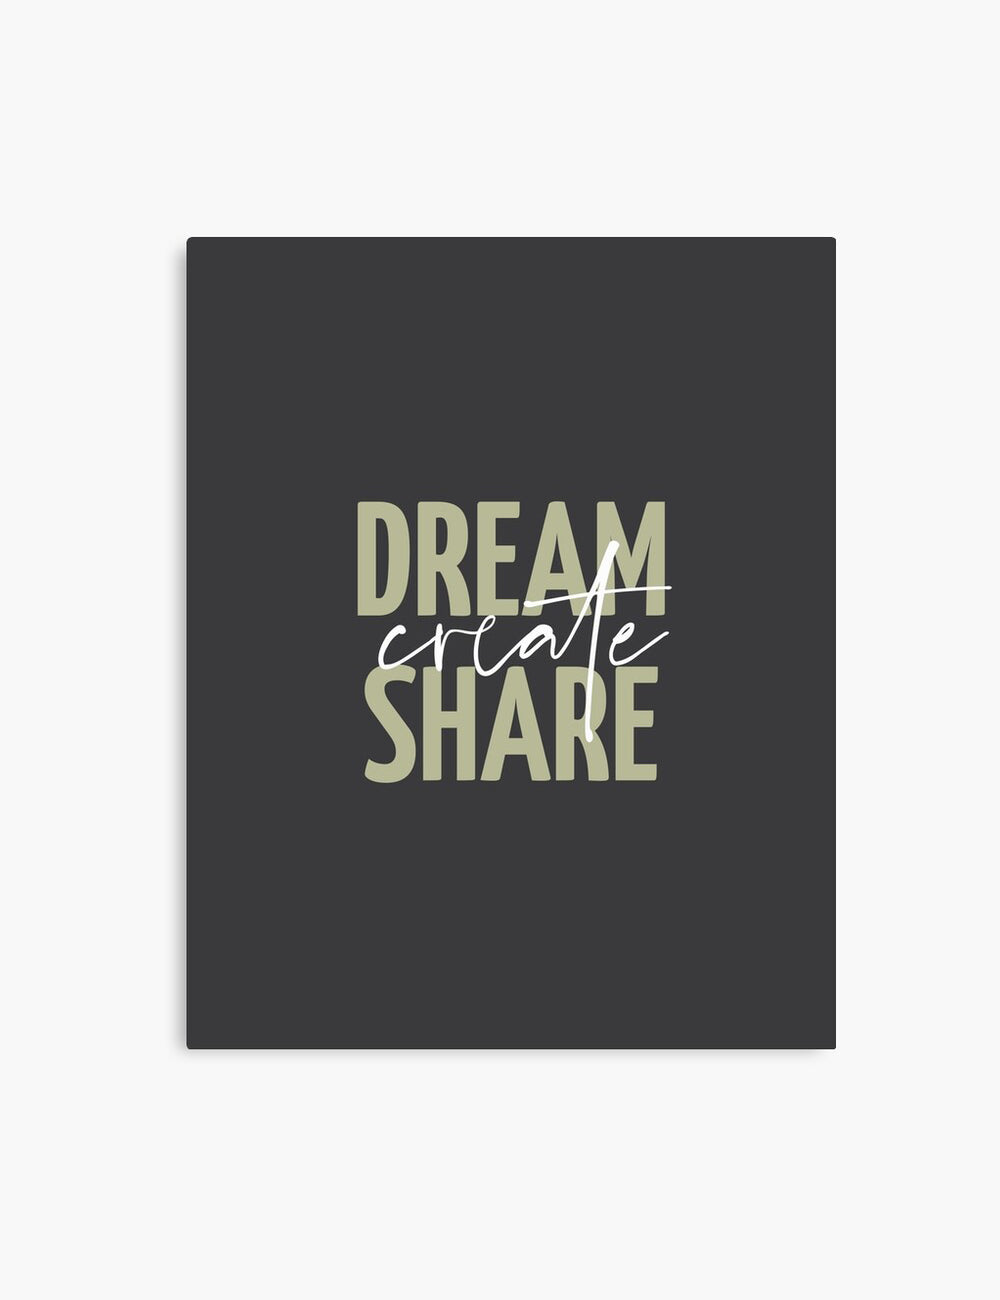 DREAM. CREATE. SHARE. Printable Wall Art Quote. Green. Dark Grey. Black.  - PAPER MOON Art & Design